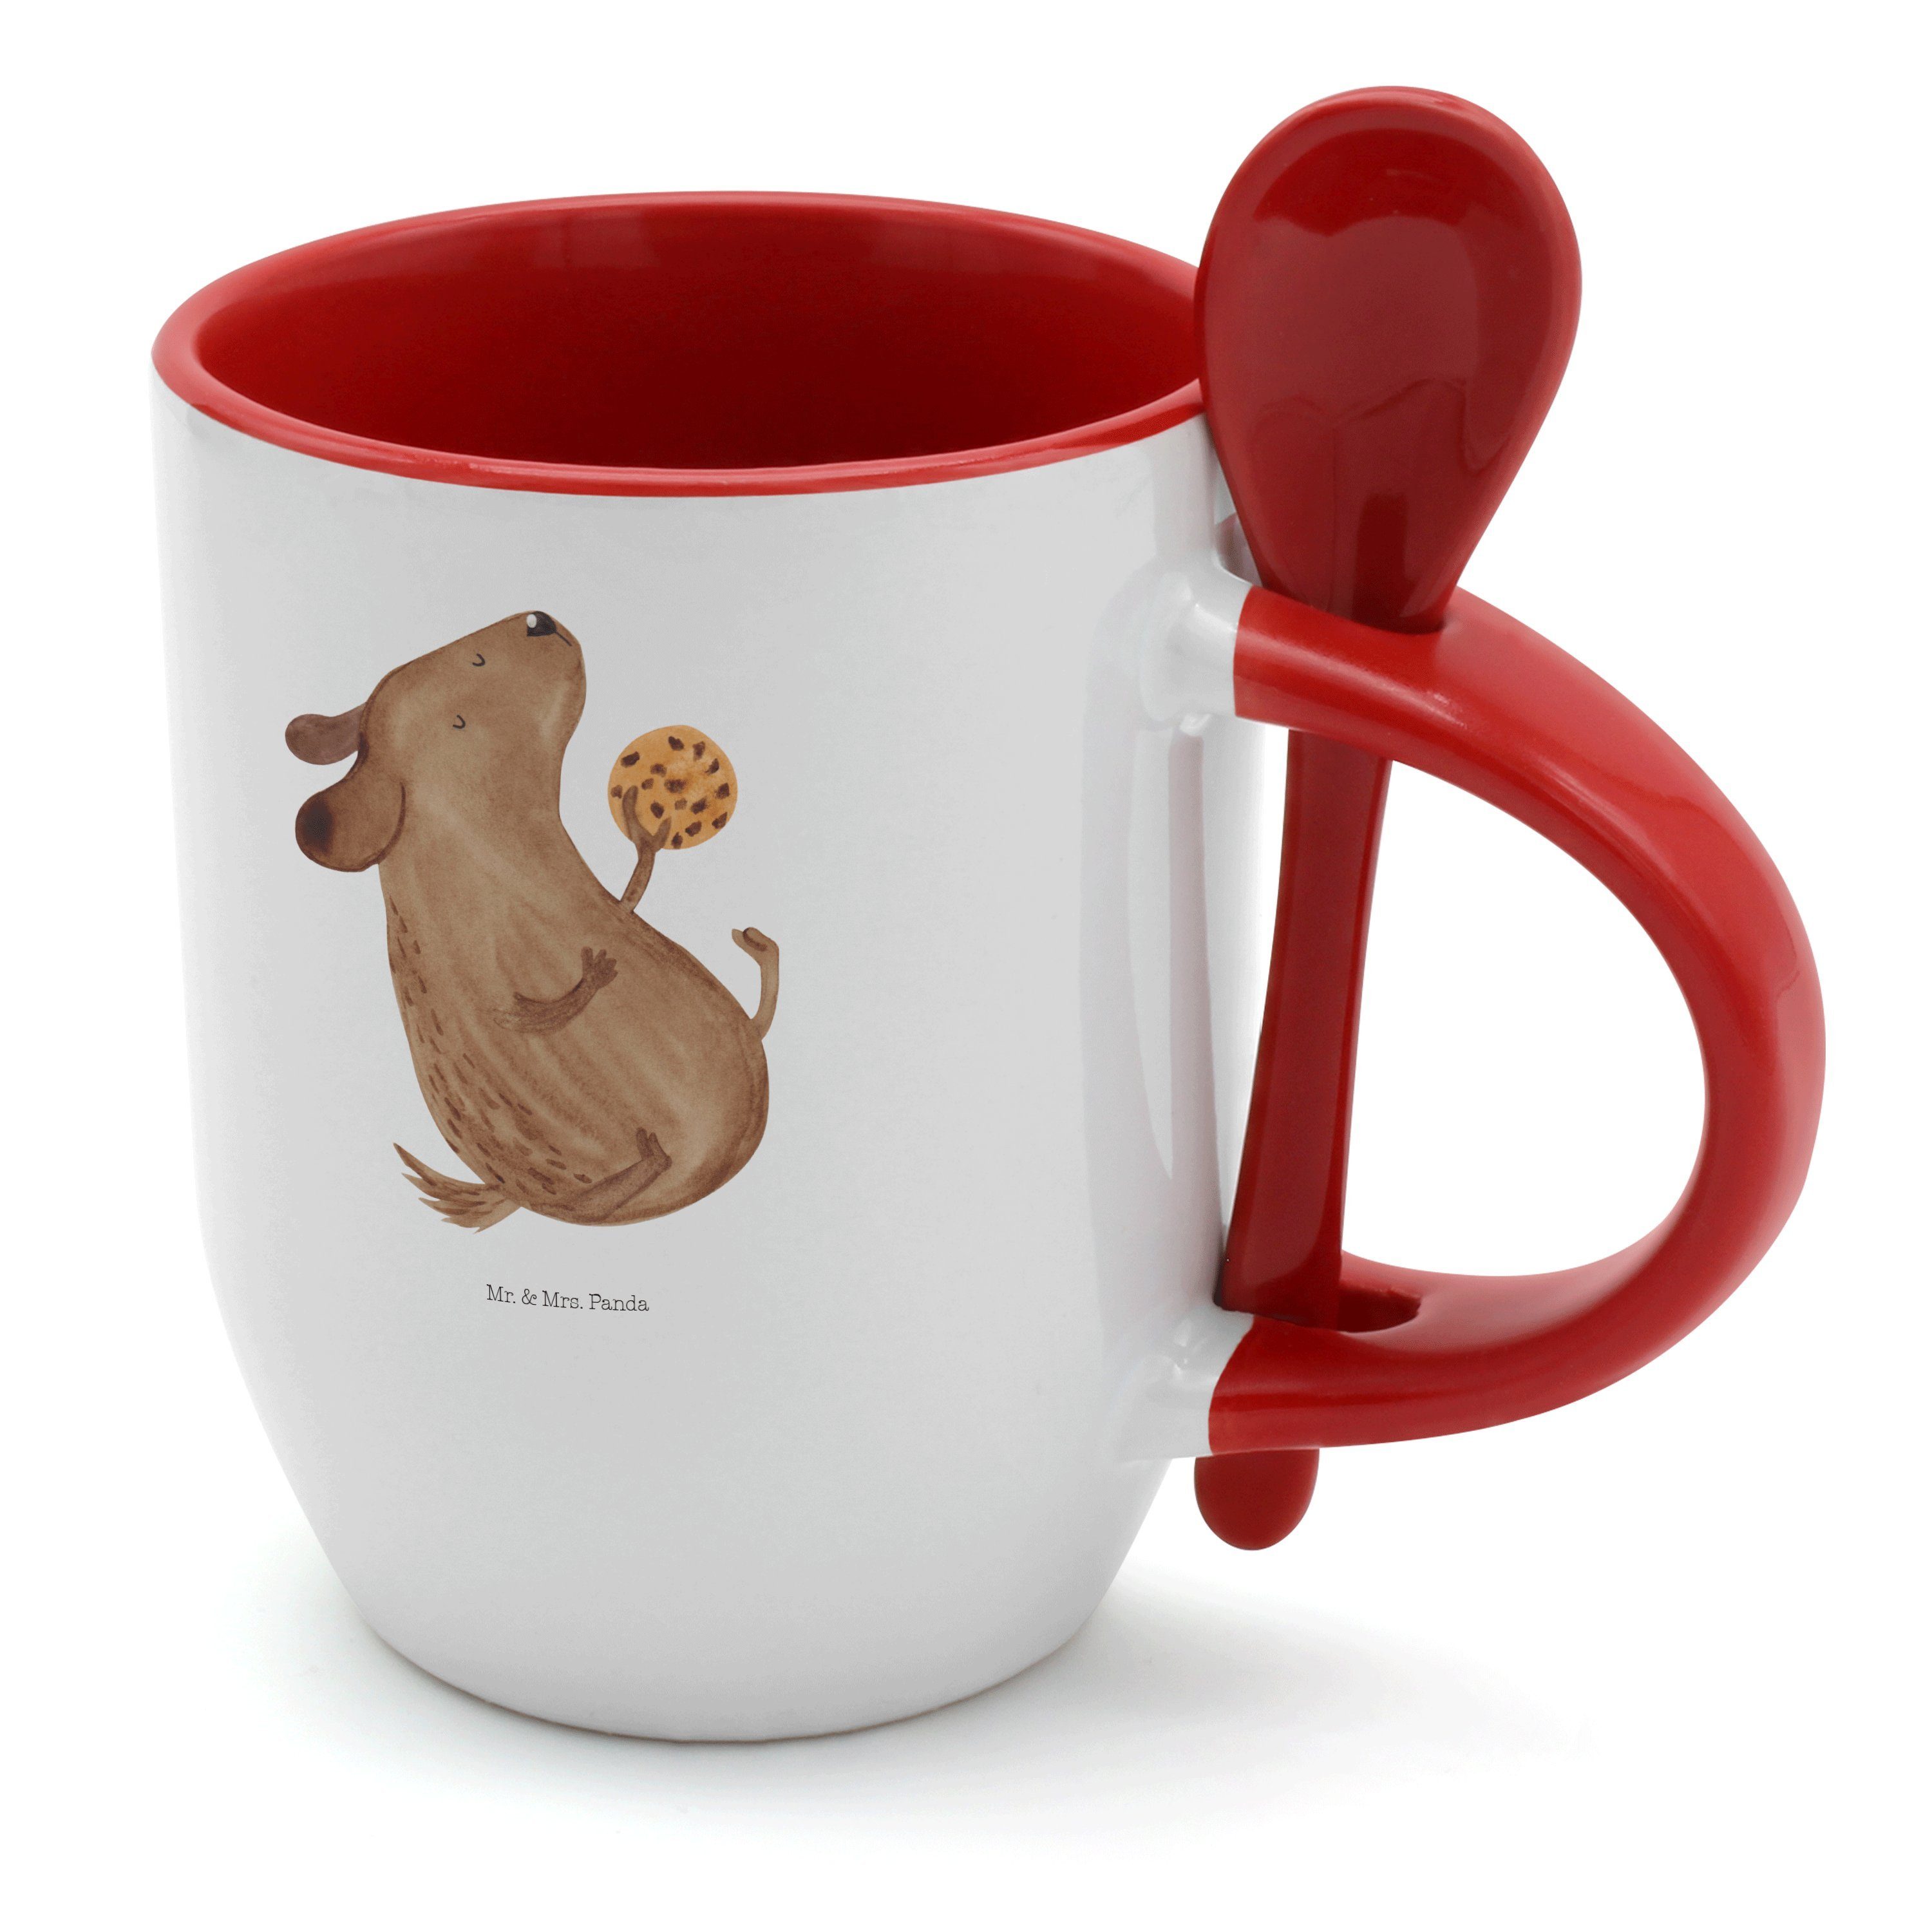 Mr. & Mrs. Panda Tasse Hund Keks - Weiß - Geschenk, Kaffeetasse, Tassen, Hundebesitzer, Hund, Keramik